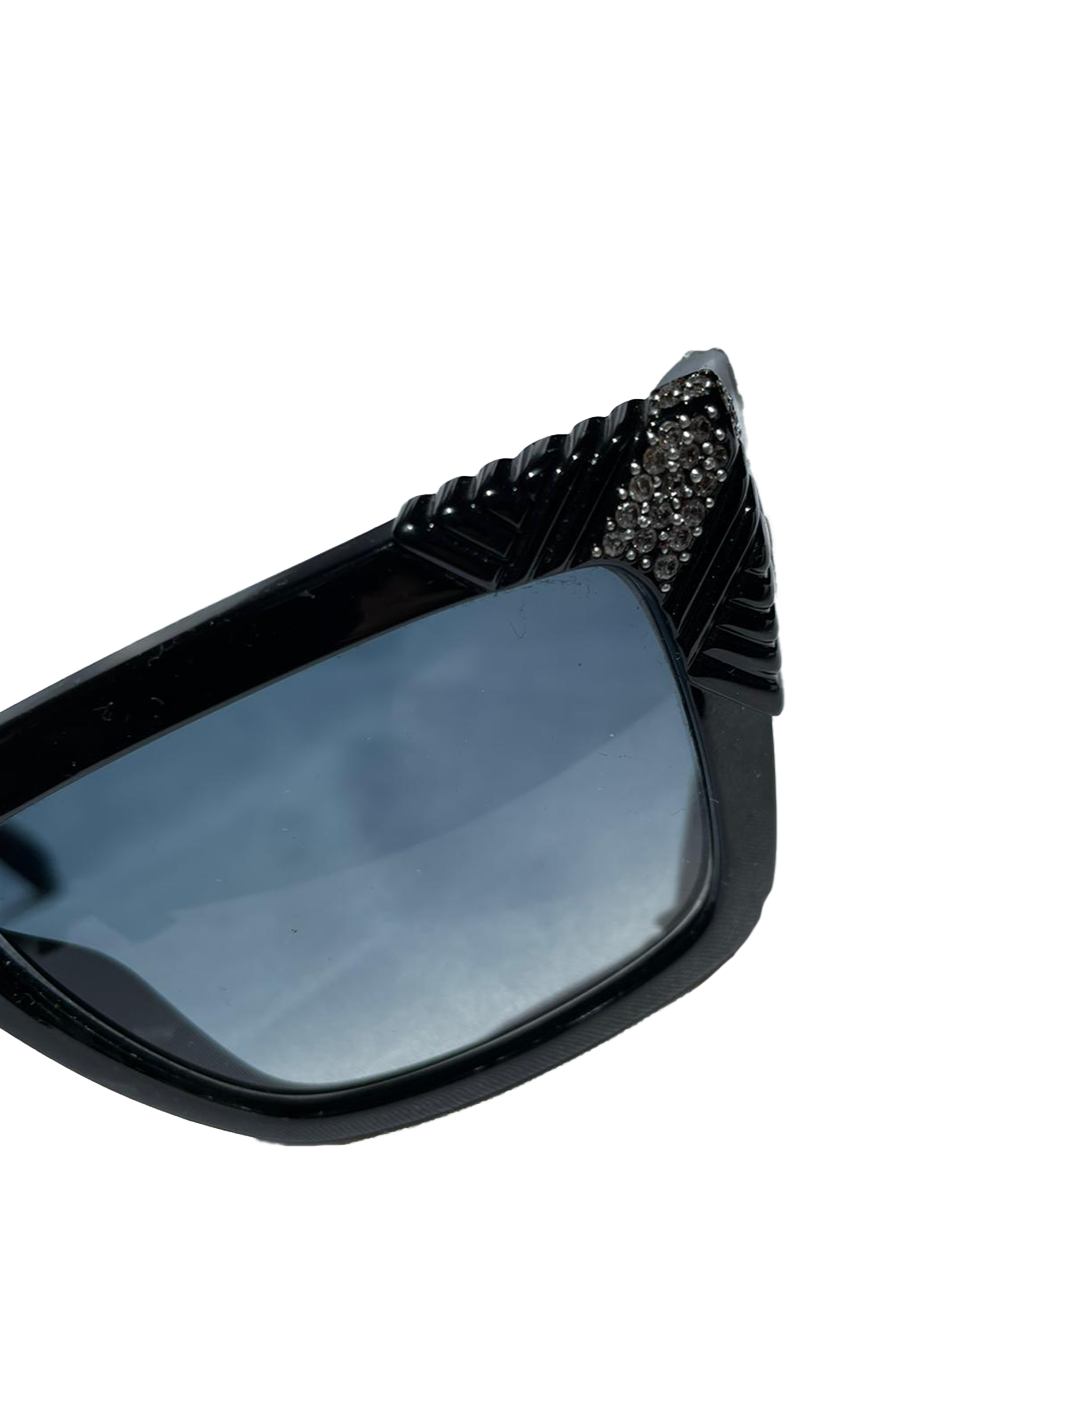 Gianni Versace 80s Black Square Sunglasses